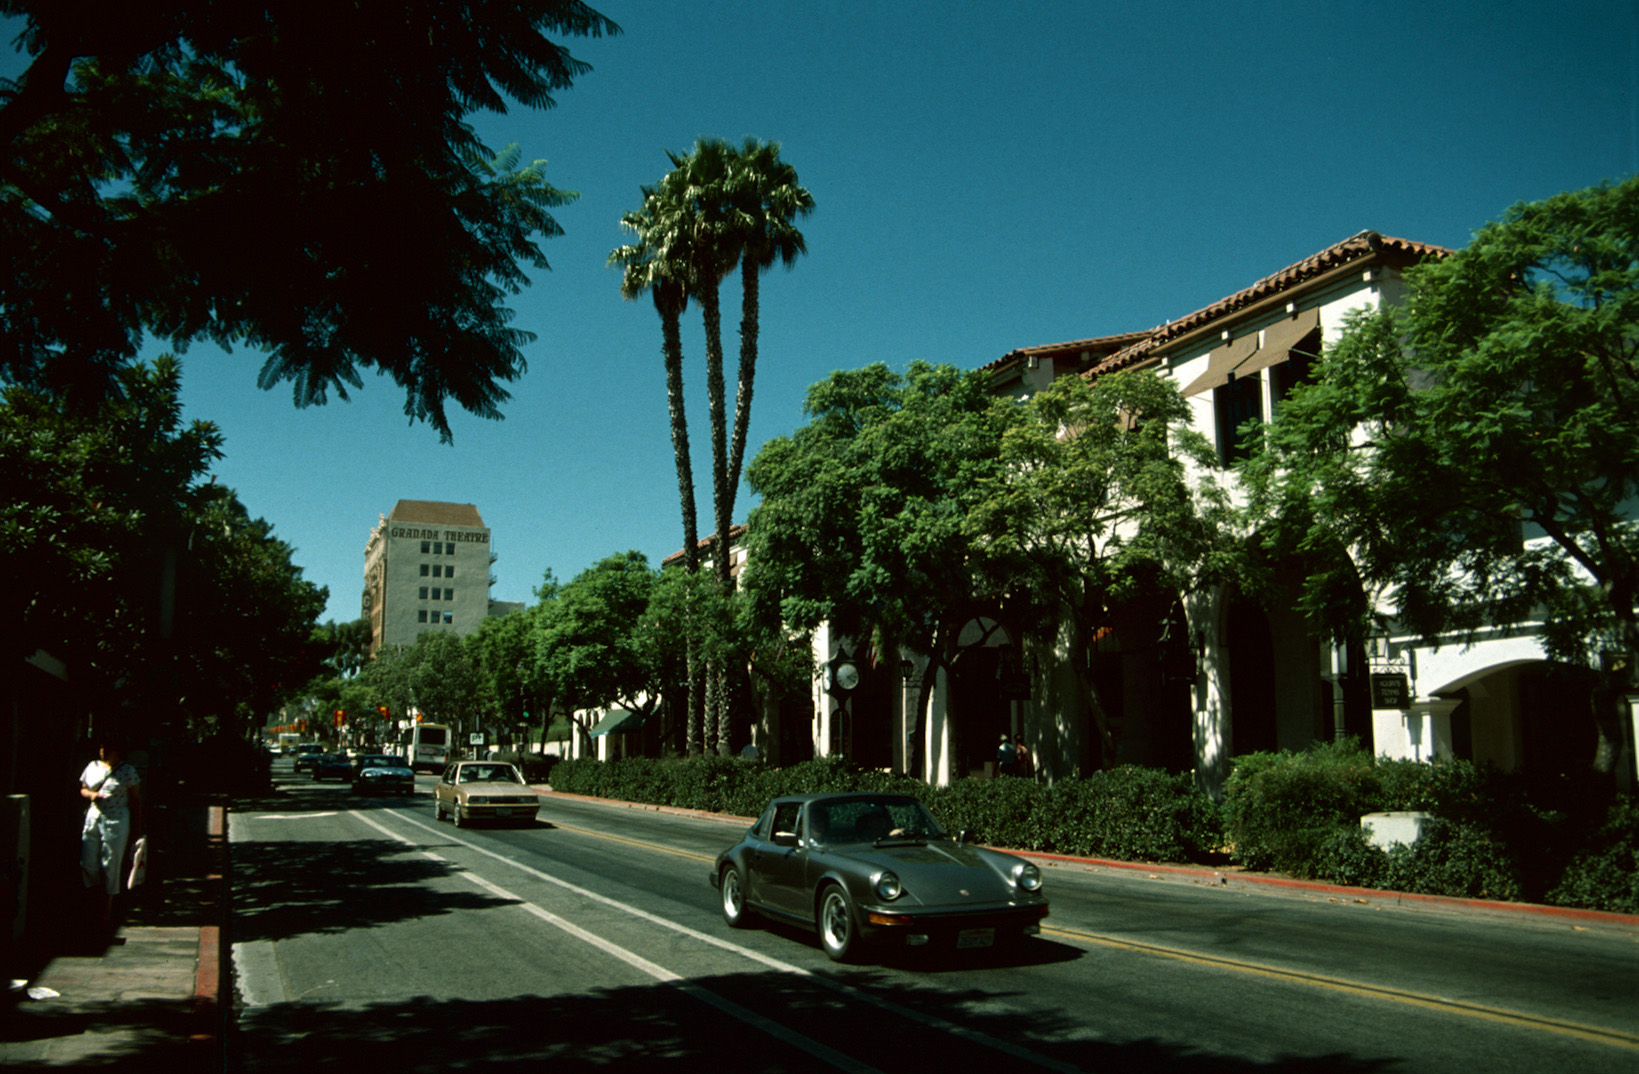 Santa Barbara, CA - 1990